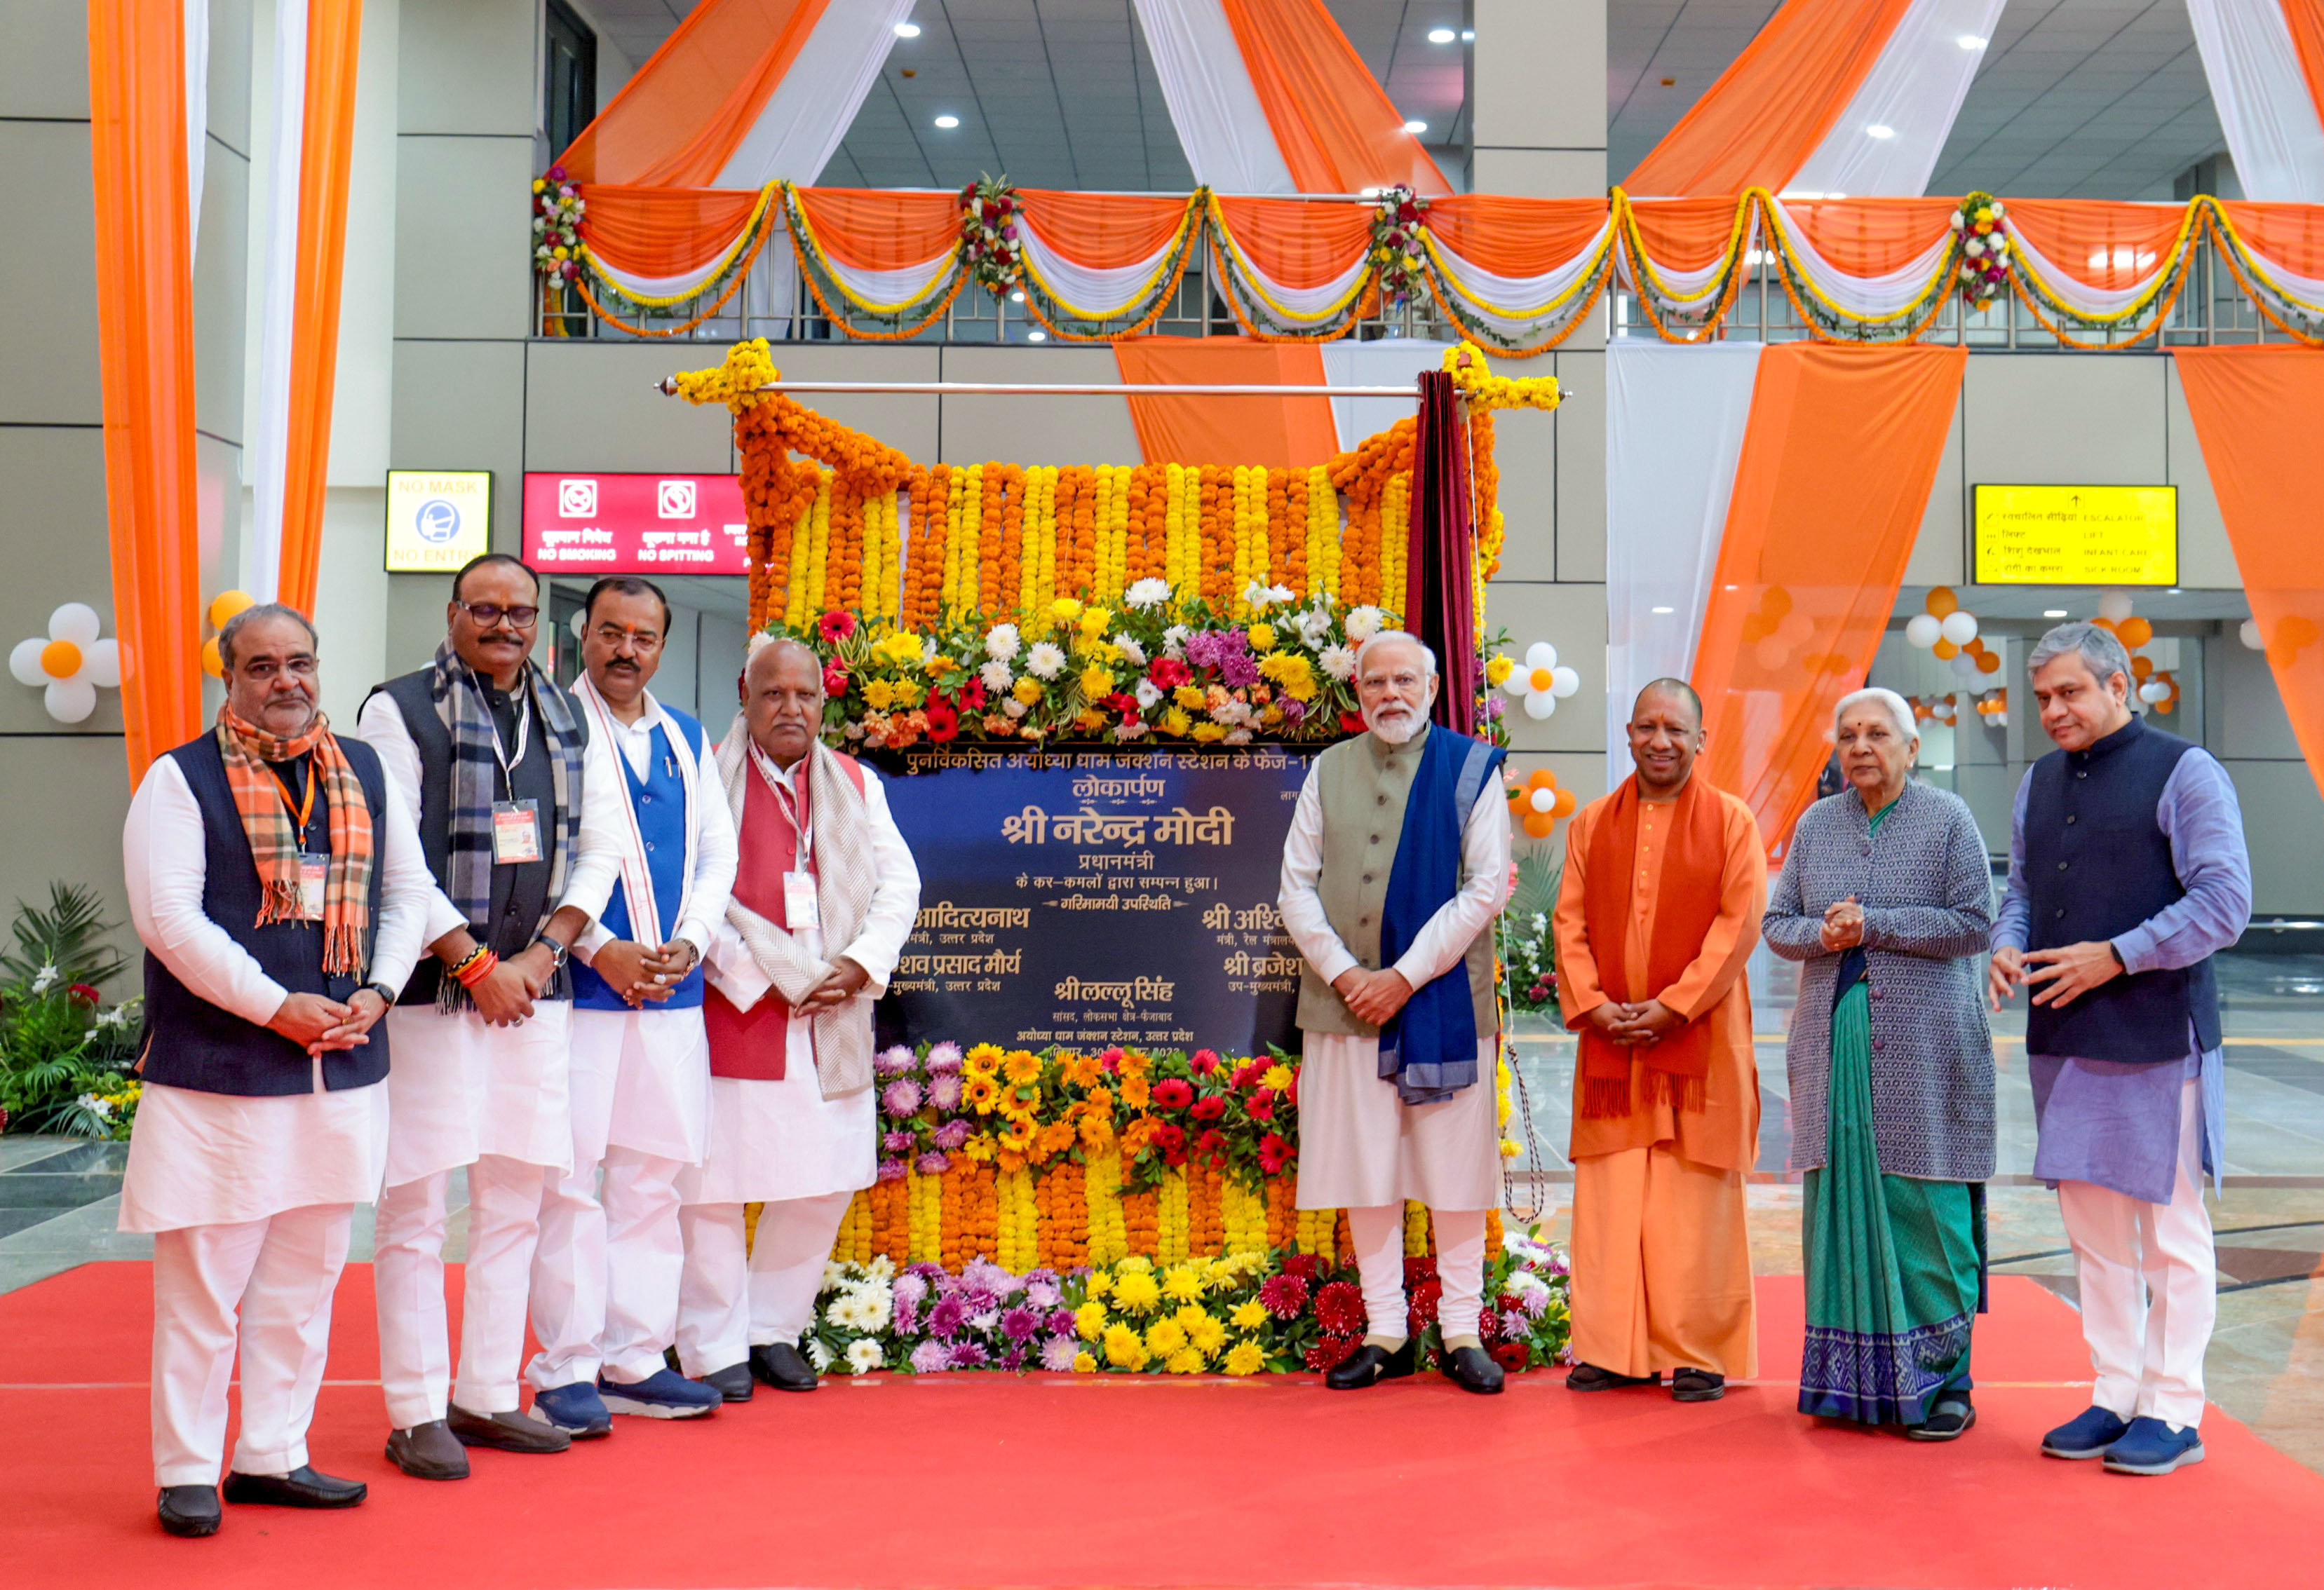 Prime Minister Narendra Modi inaugurates the Ayodhya Dham Junction railway station in Ayodhya on Saturday. Uttar Pradesh Governor Anandiben Patel, Chief Minister Yogi Adityanath, and Union Railway Minister Ashwini Vaishnaw are also seen.